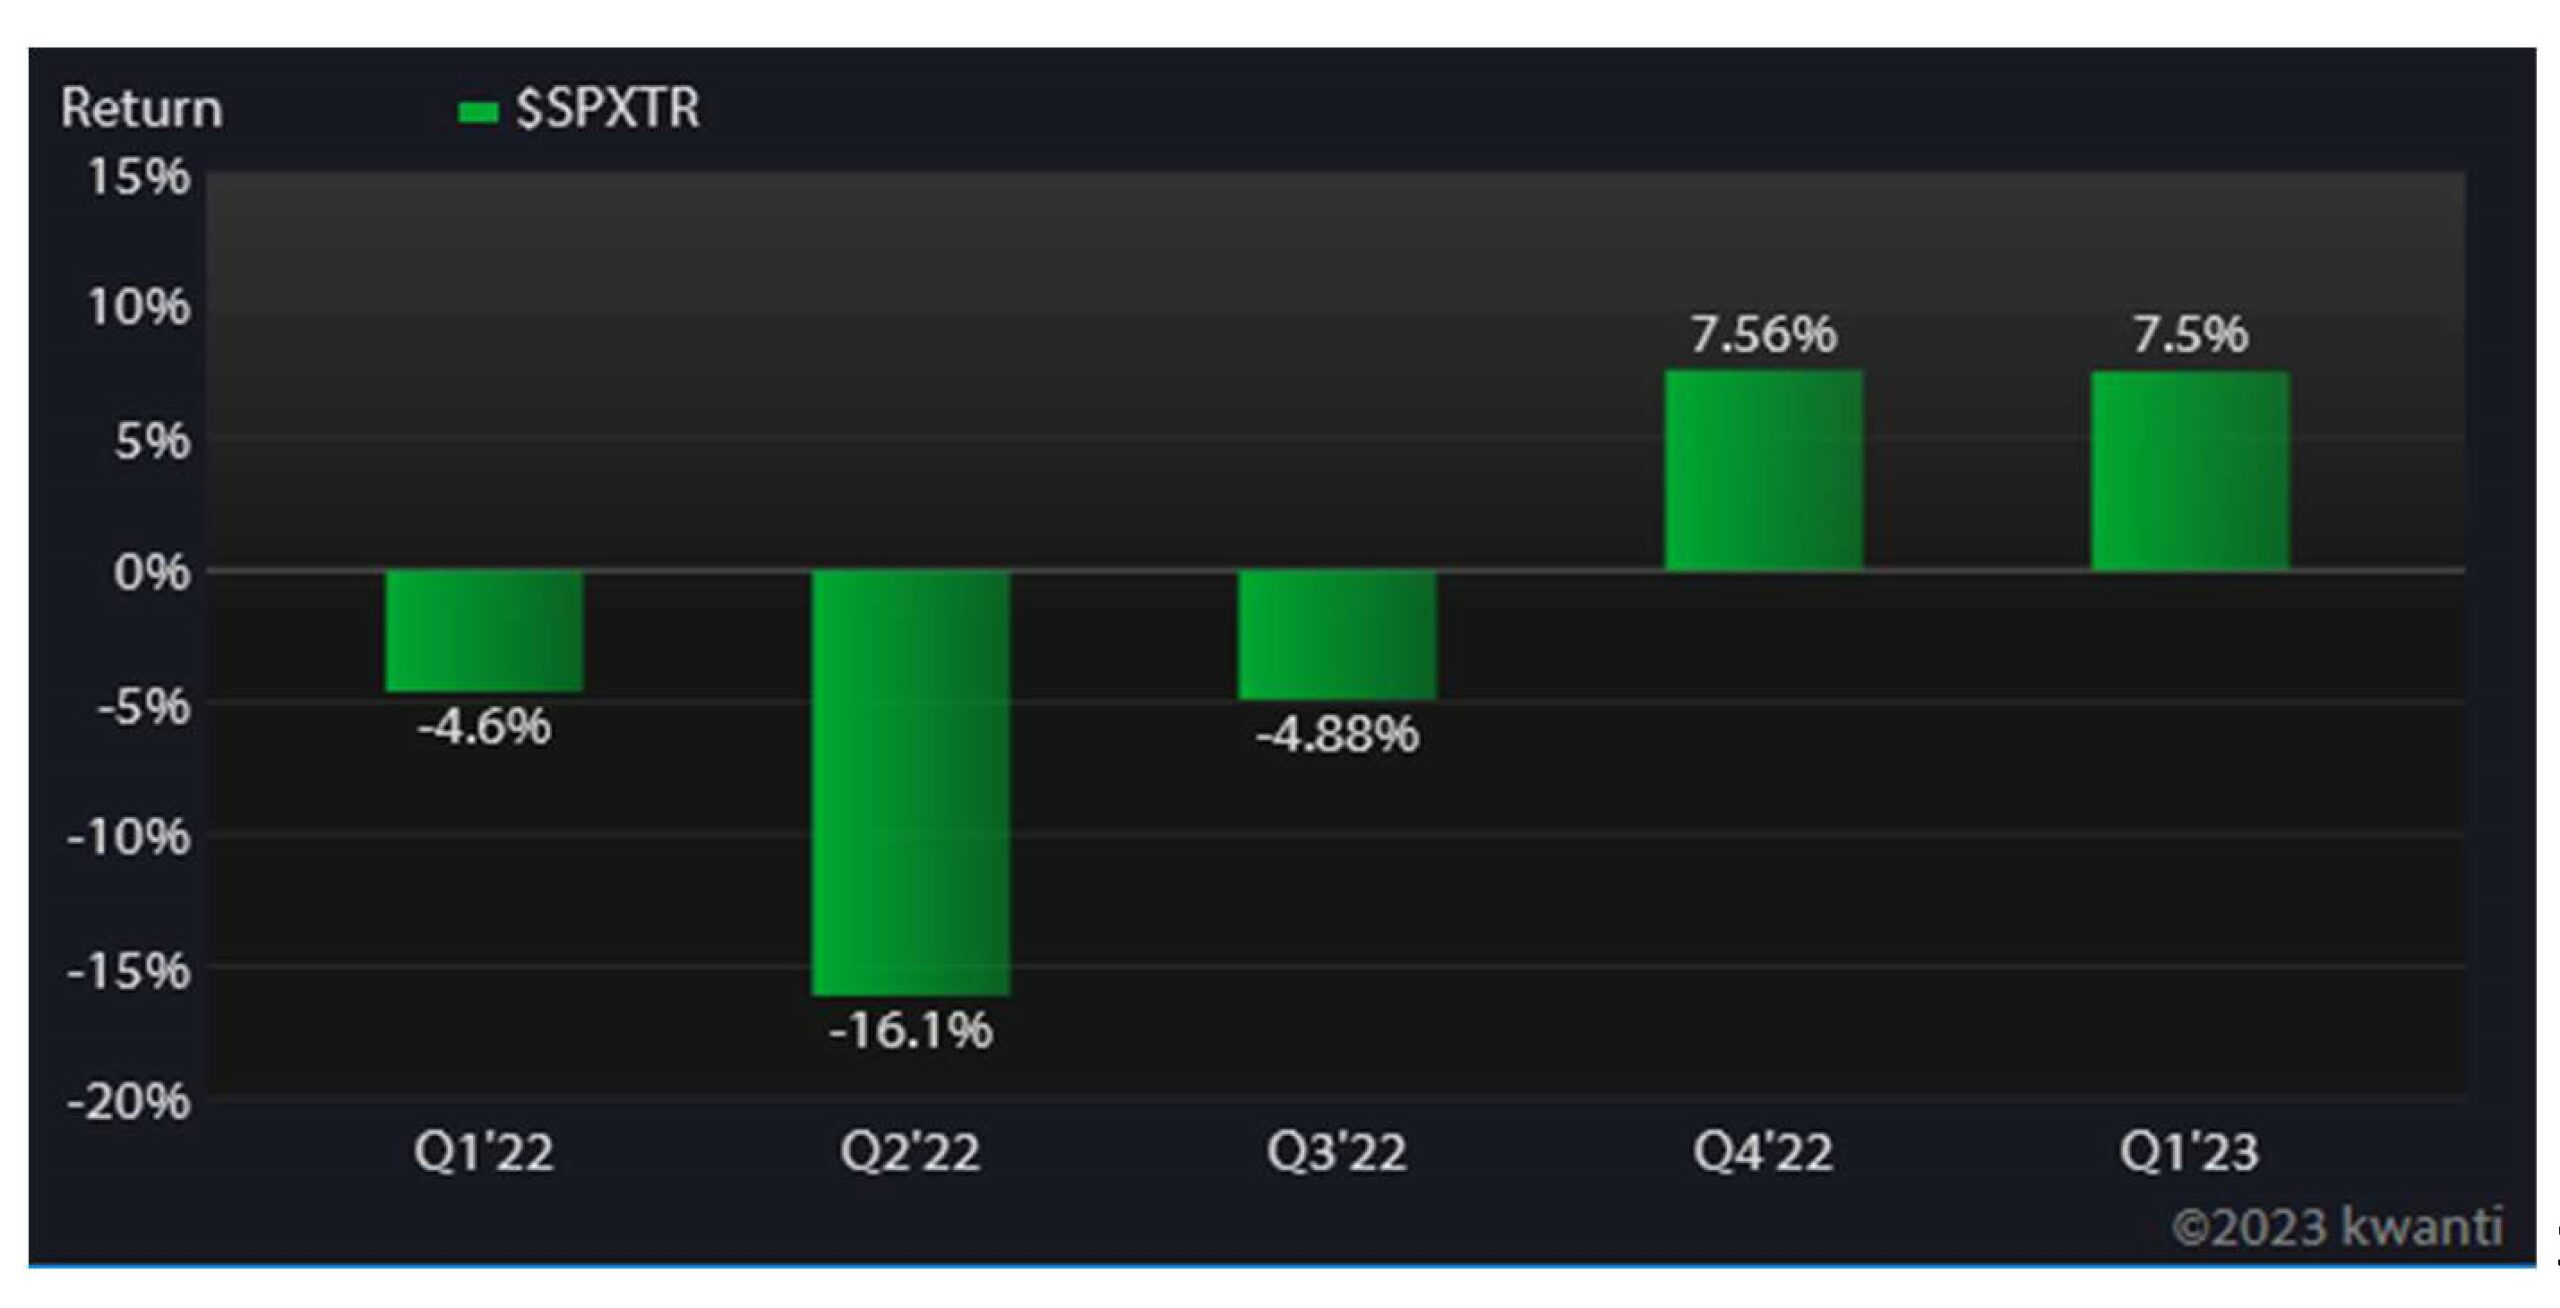 S&P 500 returns chart; Q1'22 RETURN -4.6% Q2'22 RETURN -16.1% Q3'22 RETURN -4.88% Q4'22 RETURN +7.56% Q1'23 RETURN +7.5% 